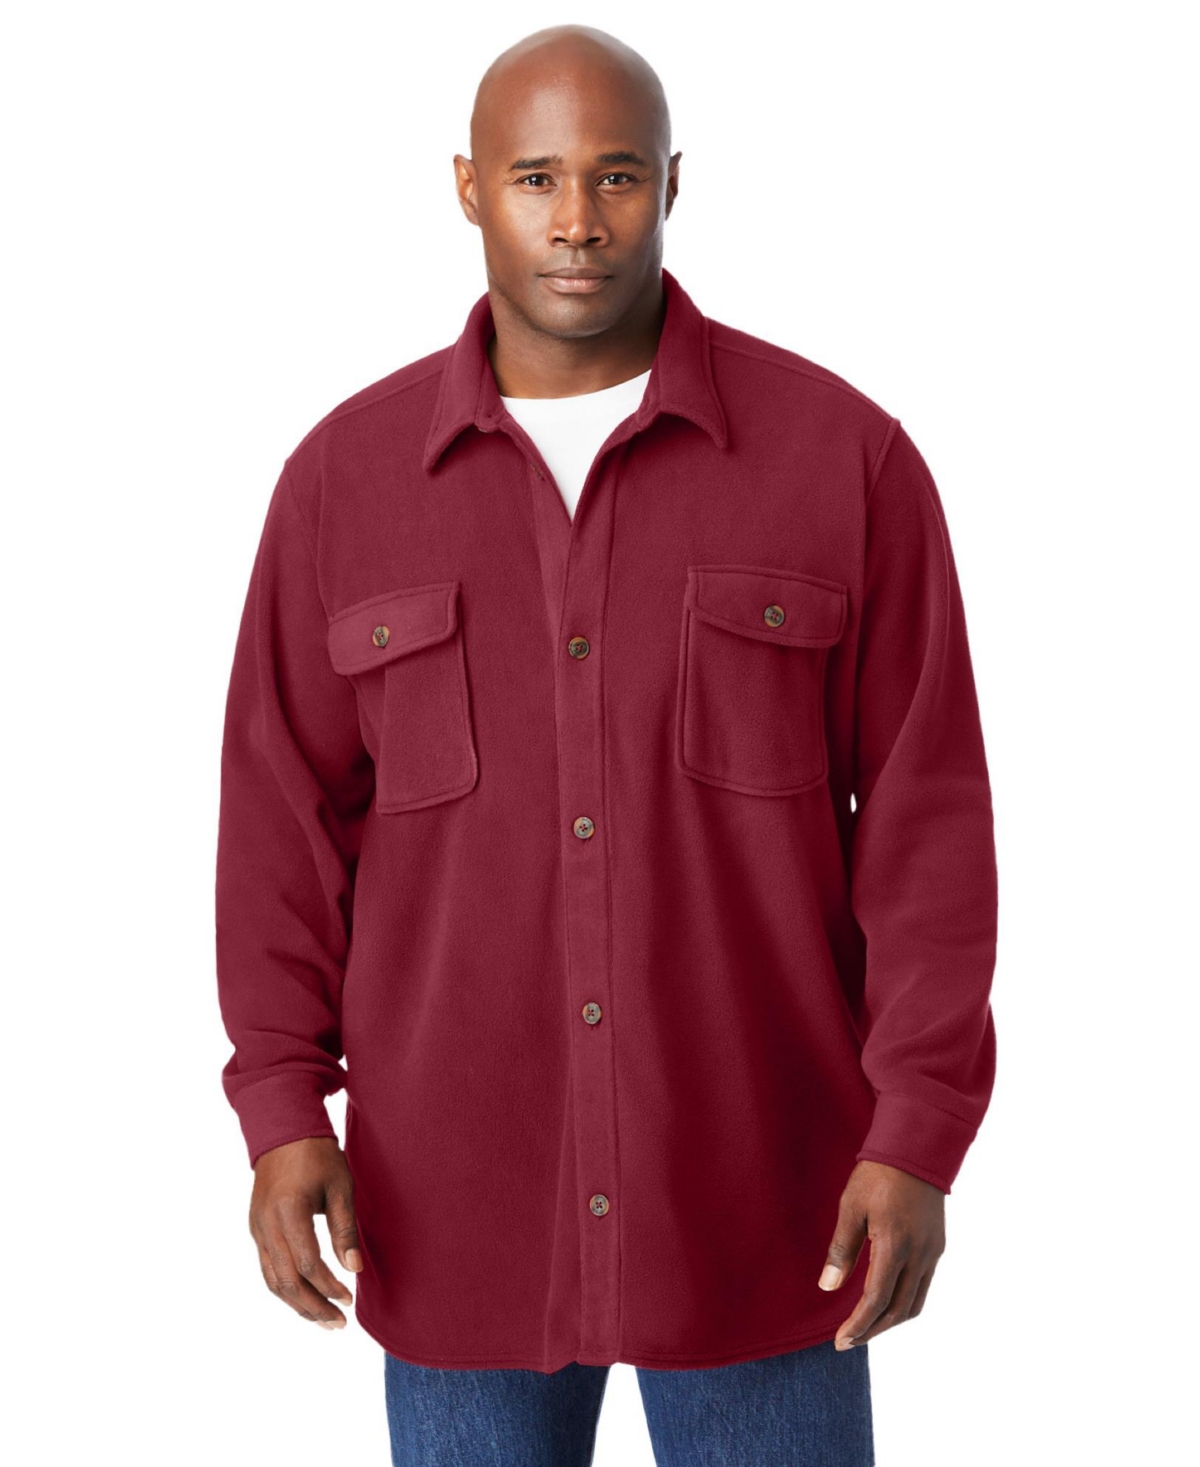 Big & Tall Microfleece Shirtjacket - Rich burgundy